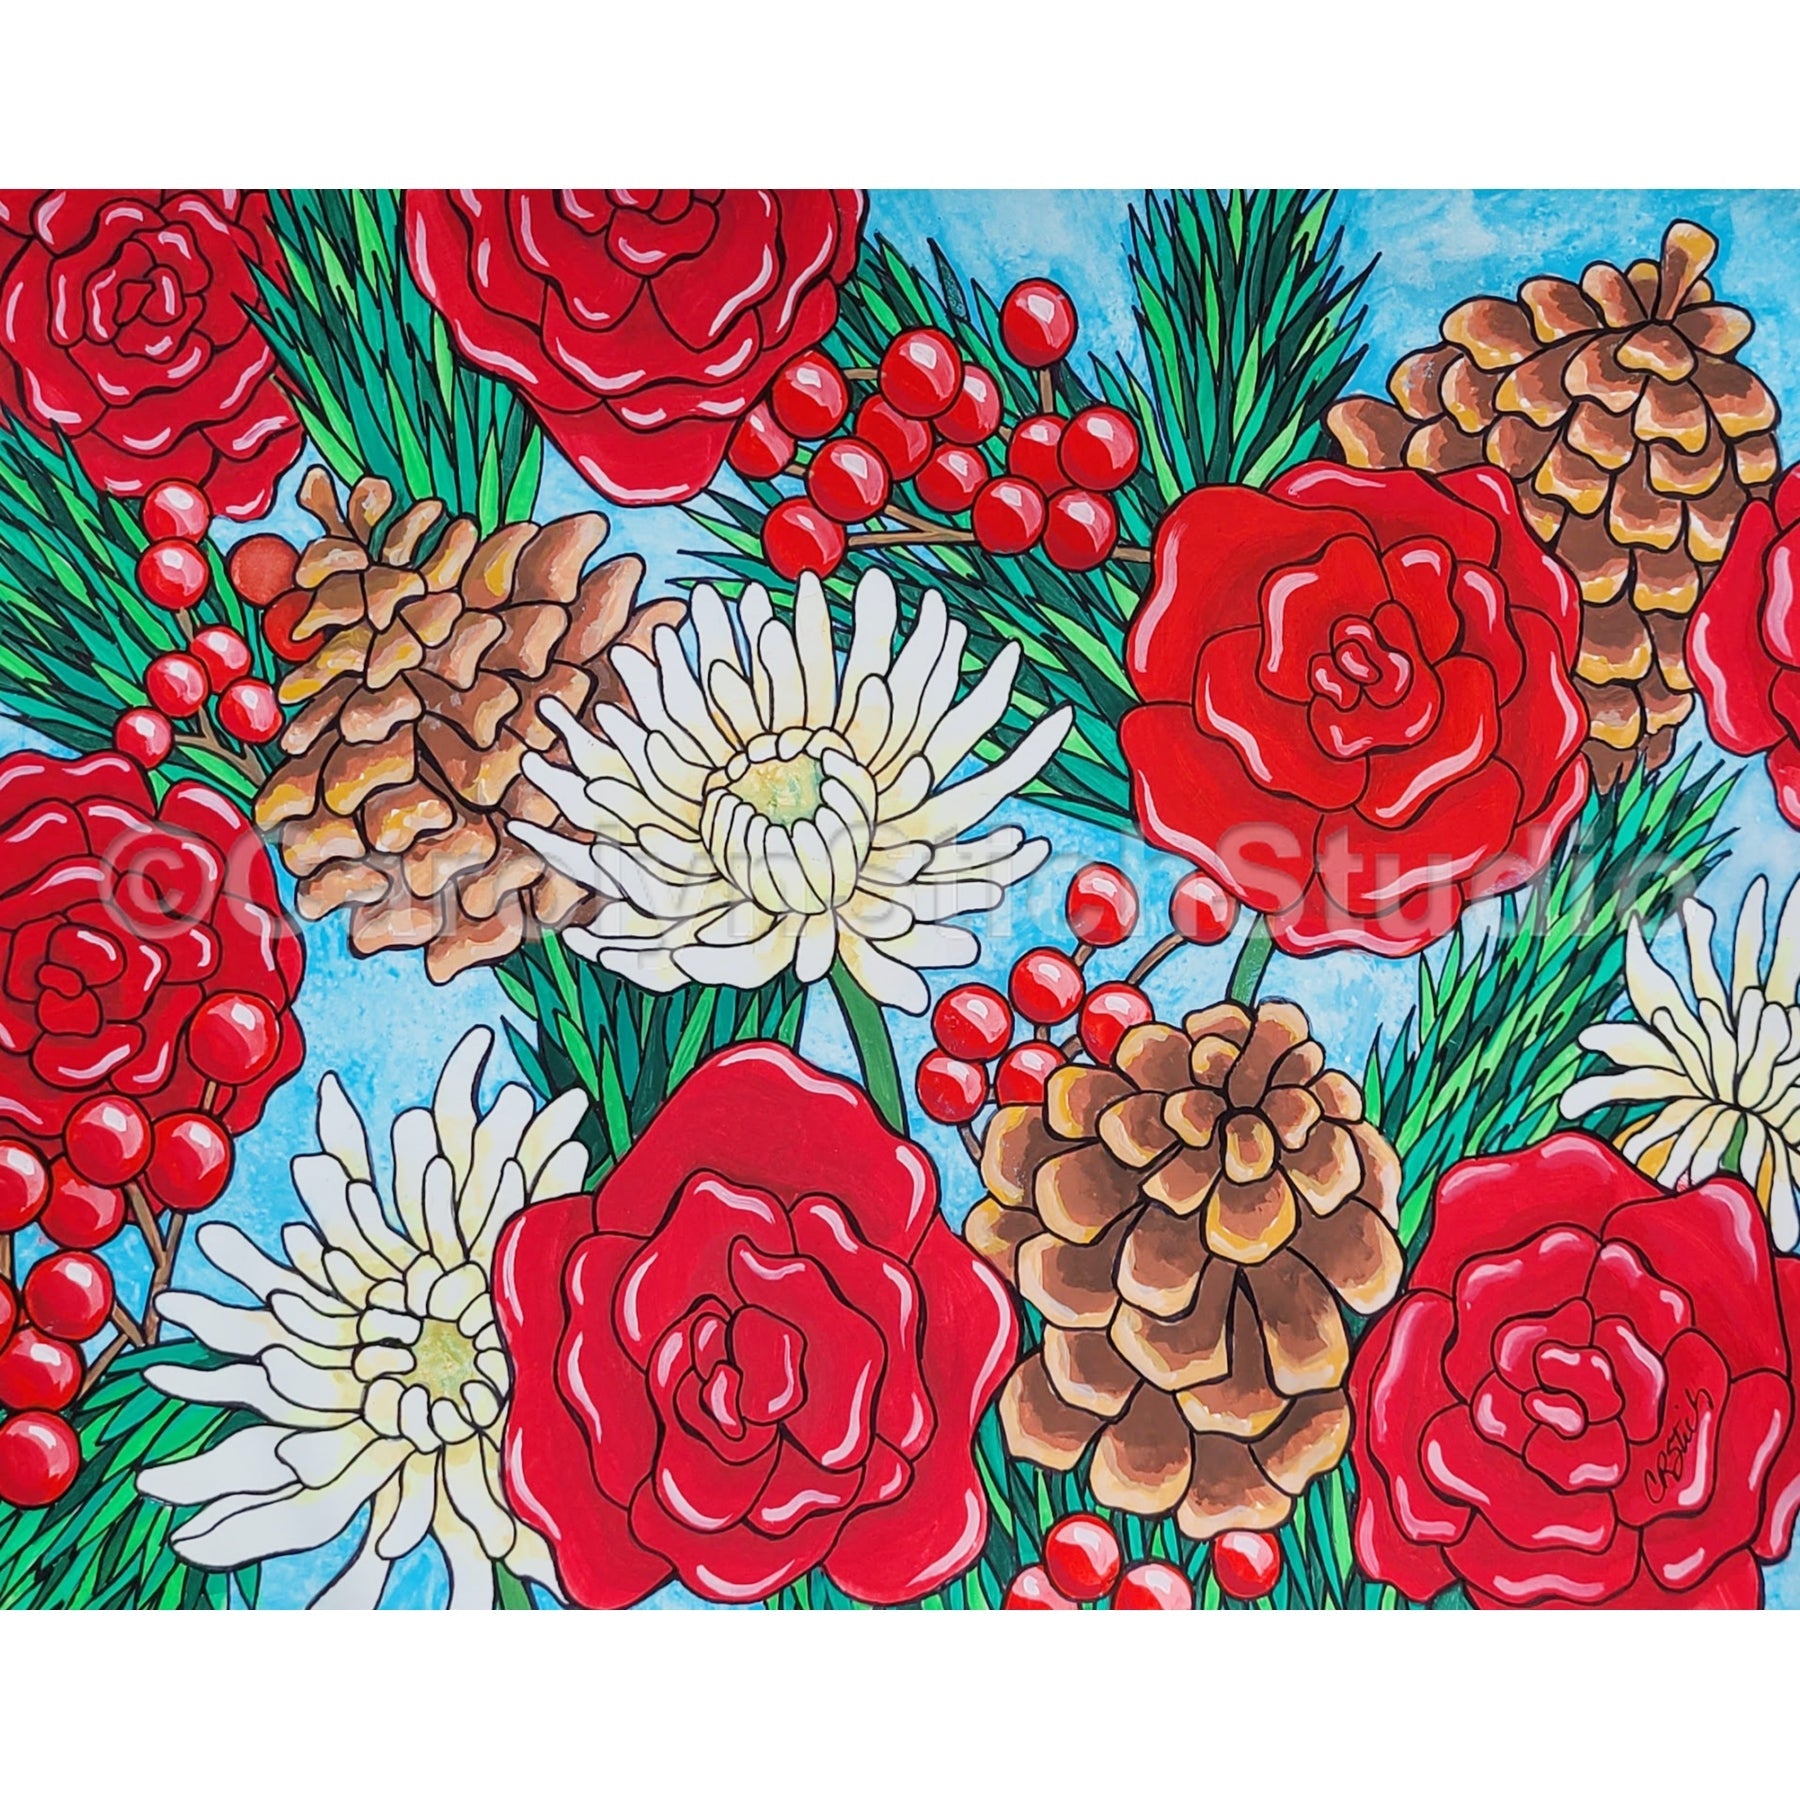 Chrismas Bouquet, rug hooking pattern